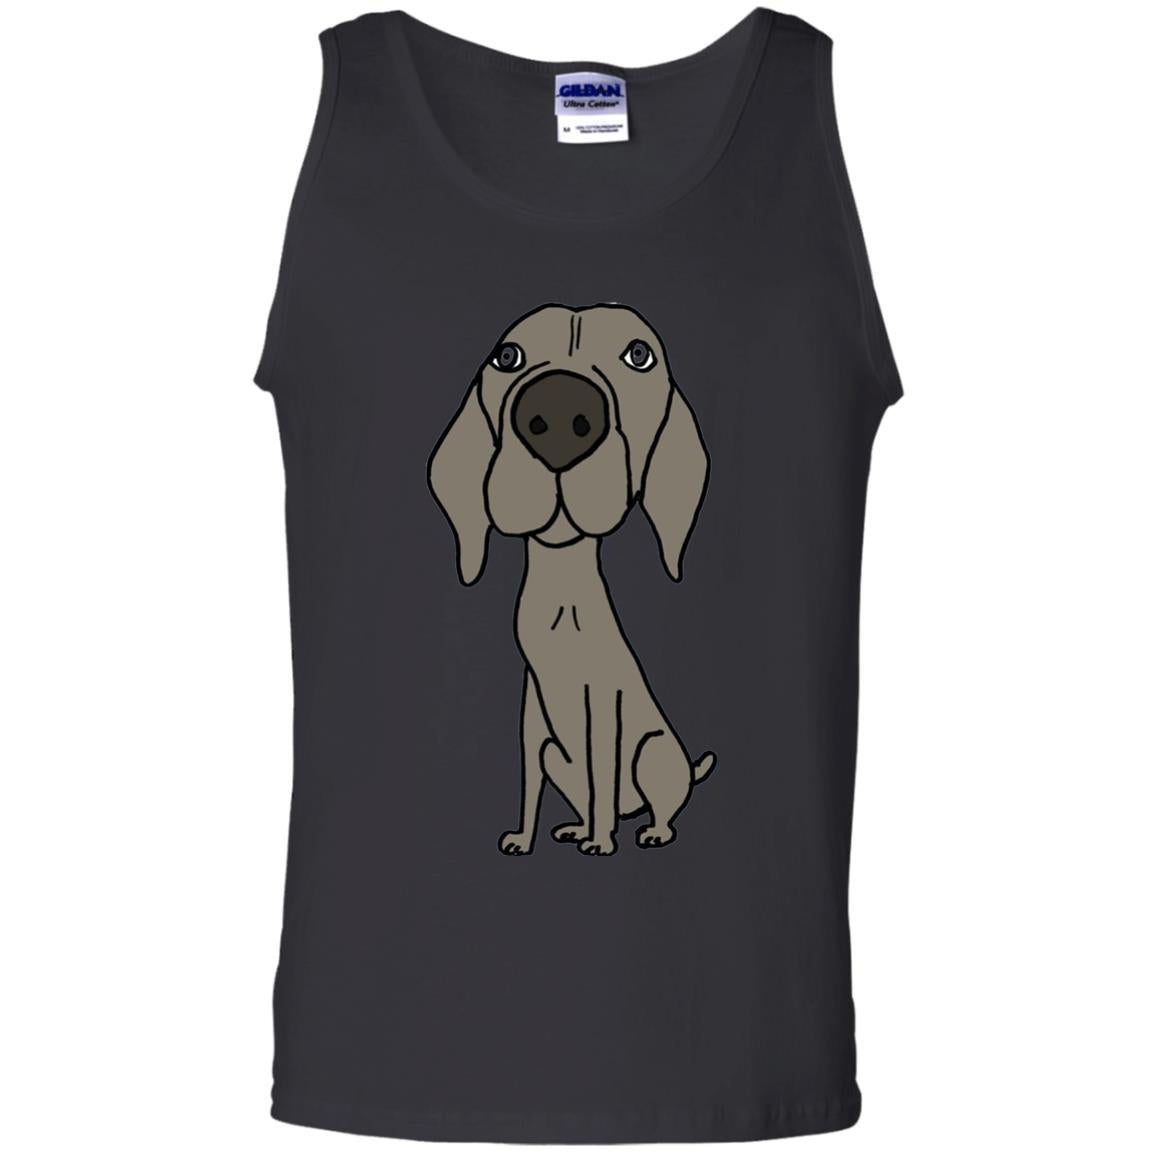 Smiletodaytees Funny Weimaraner Dog Cartoon T-shirt